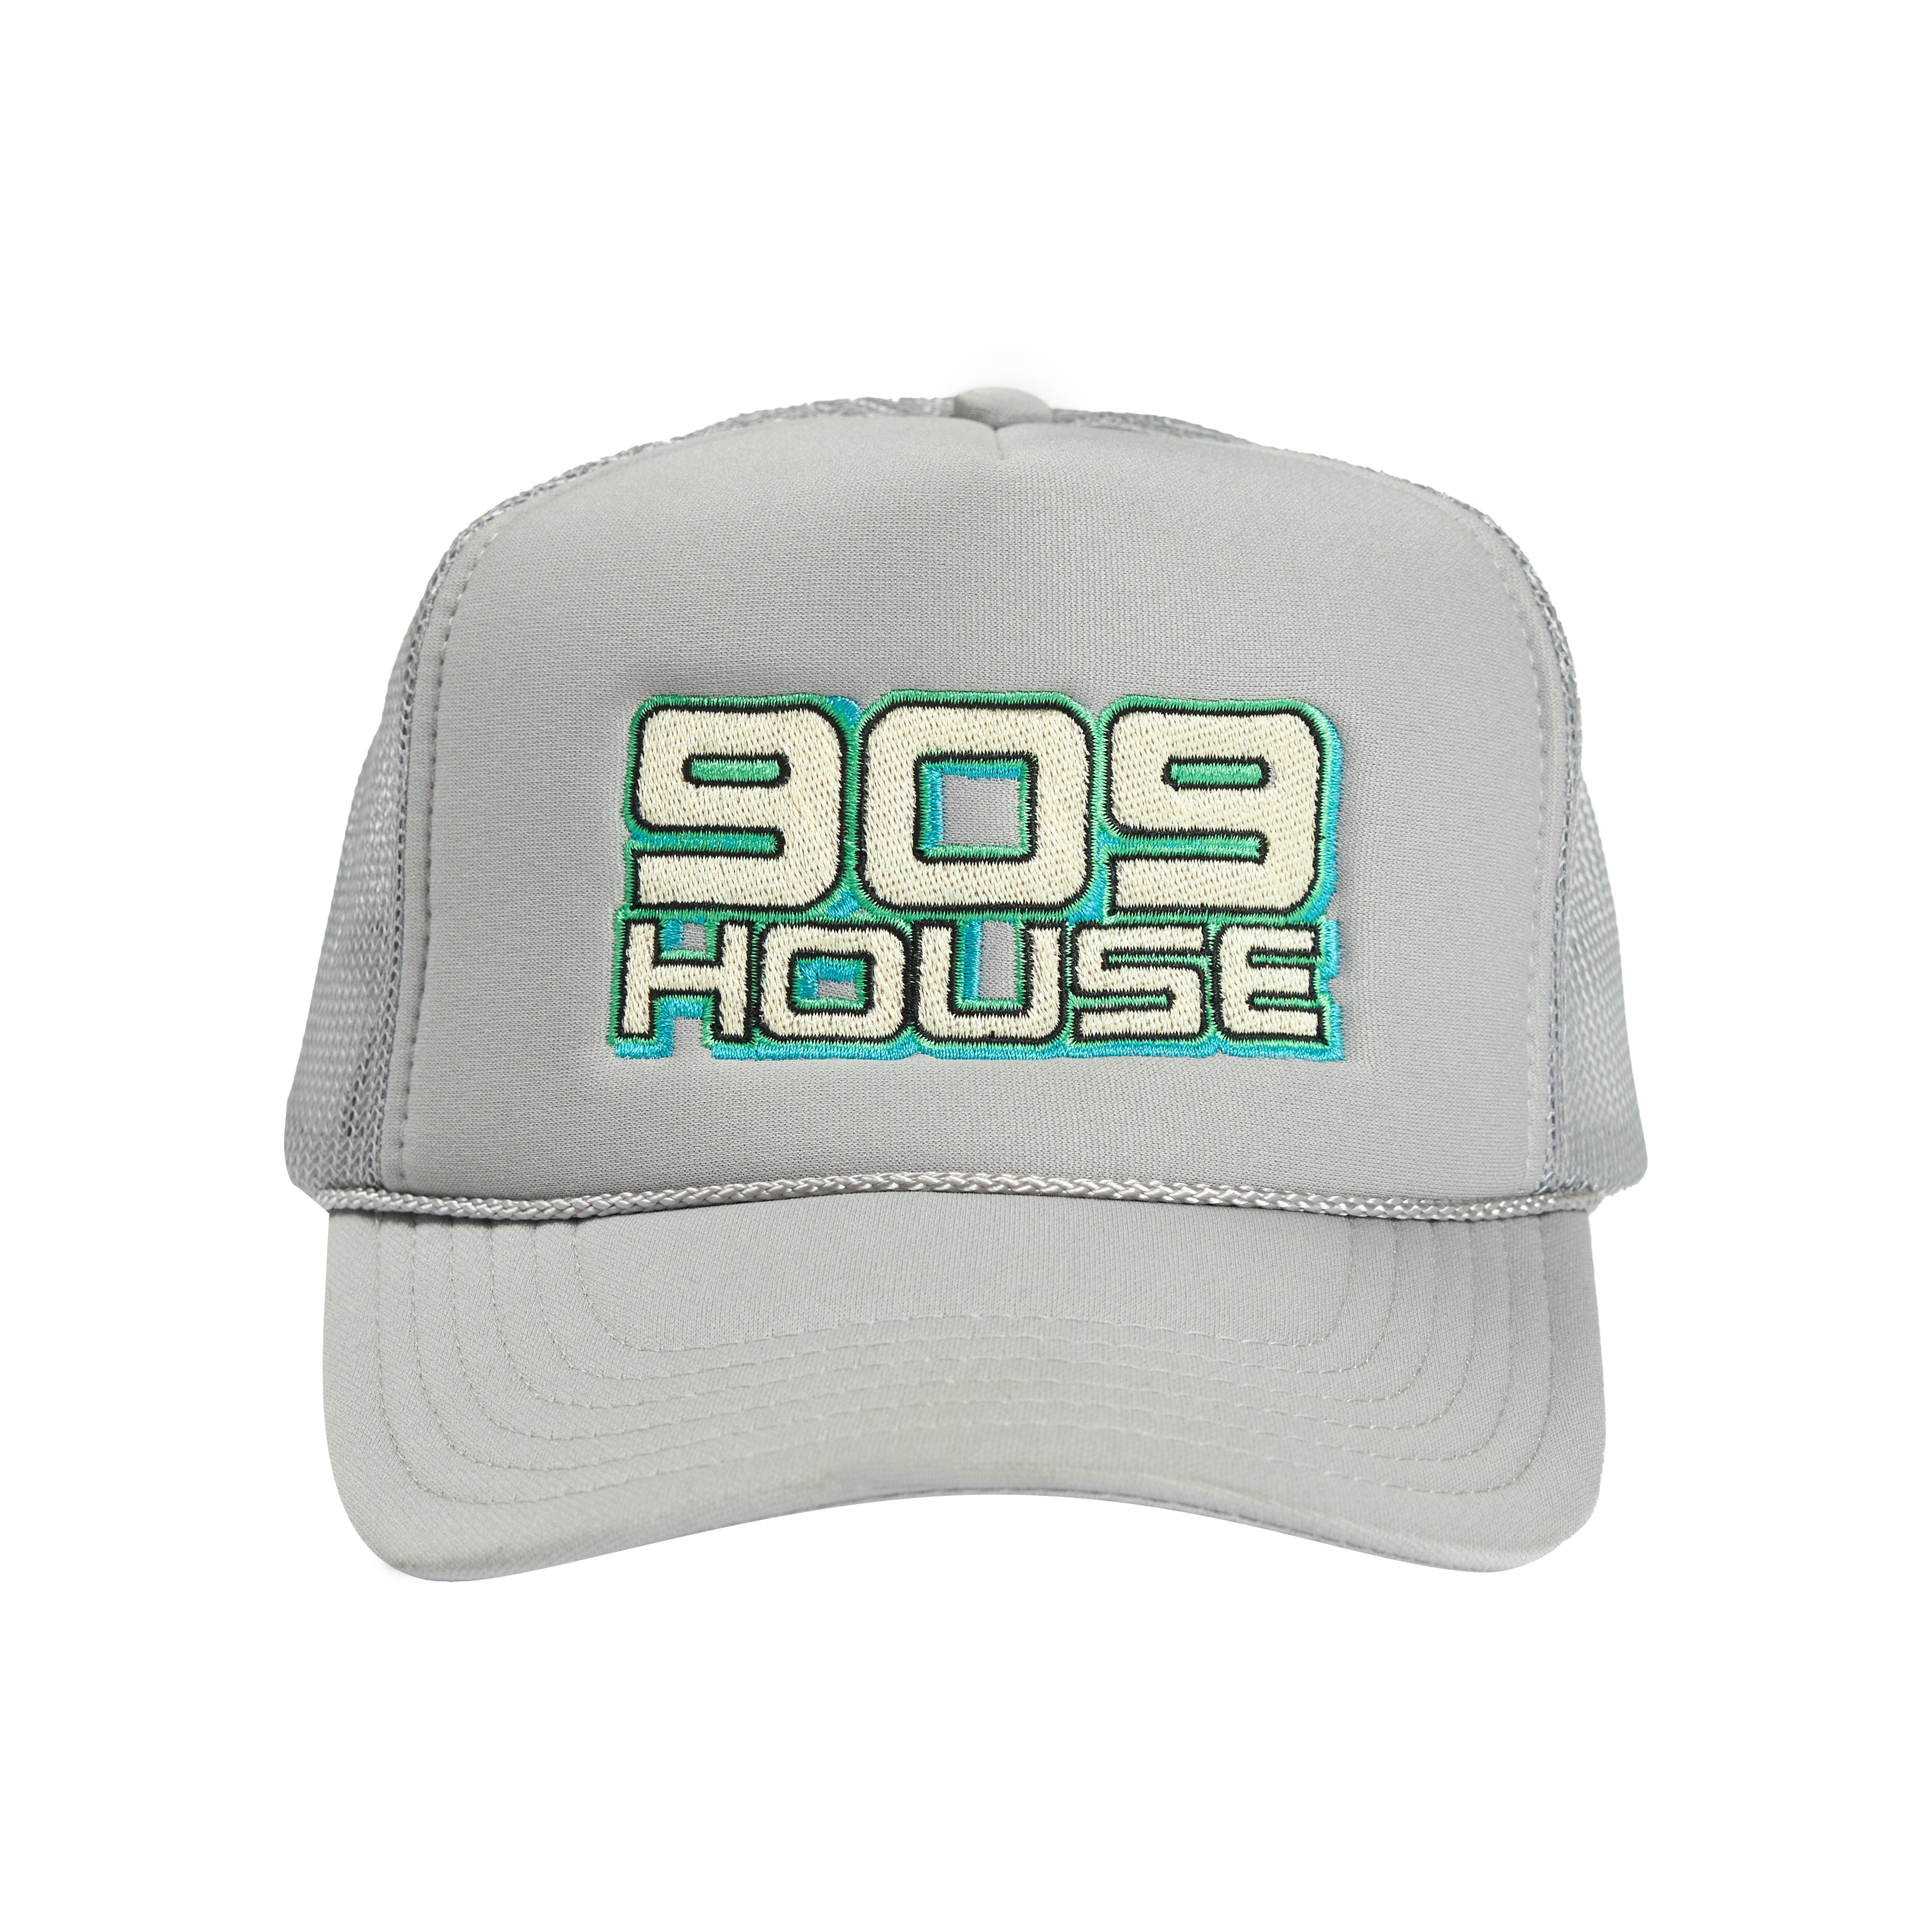 House Trucker Hat